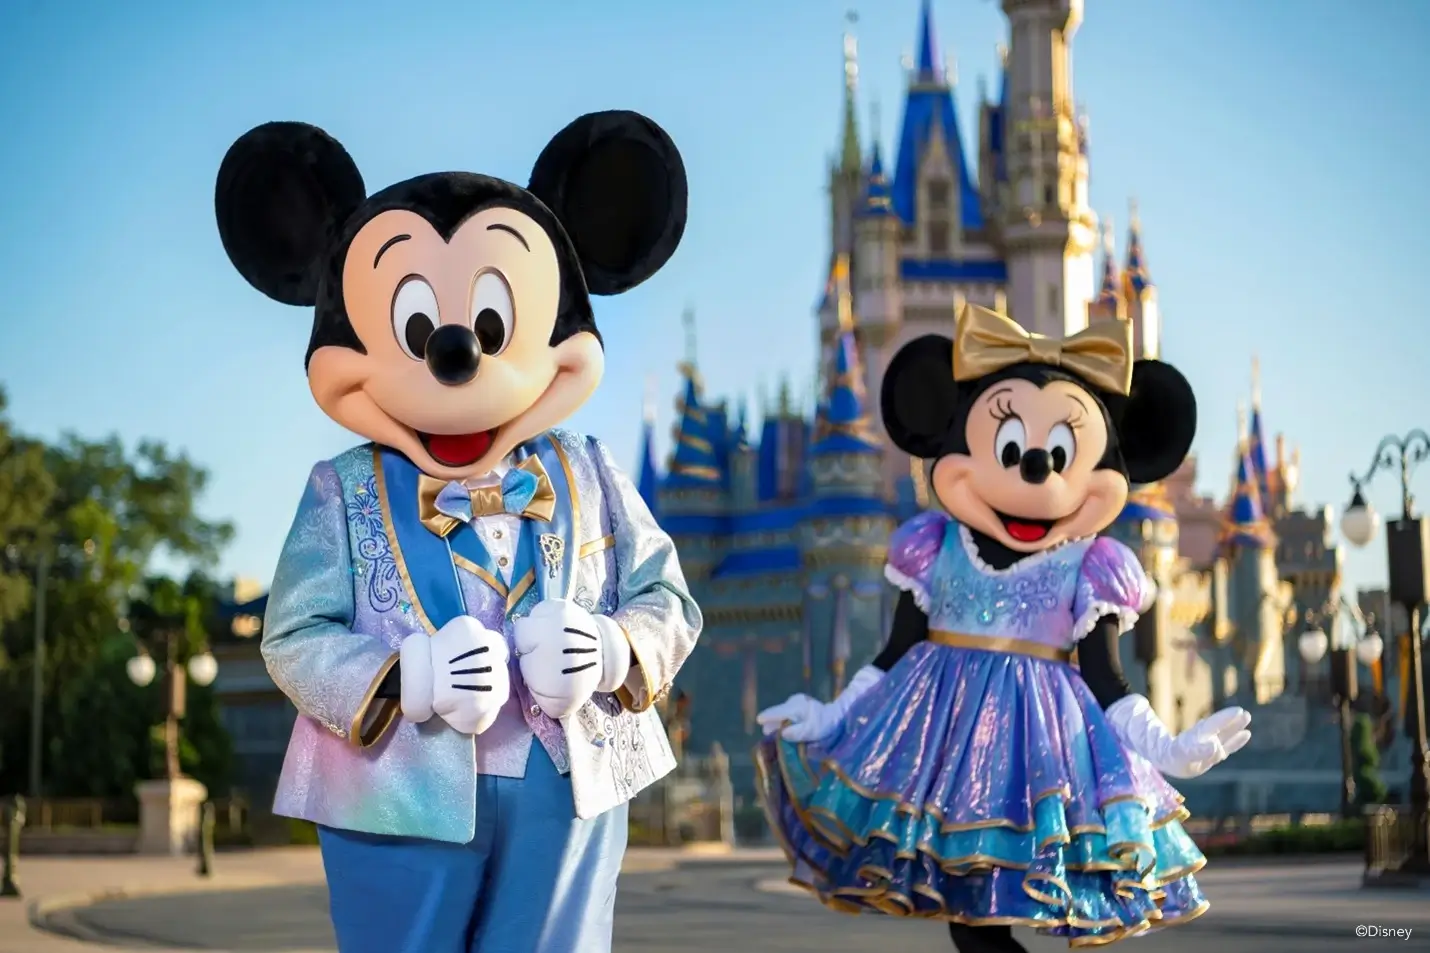 WDW - Disney Park Pass System - My Mickey Vacation Travel